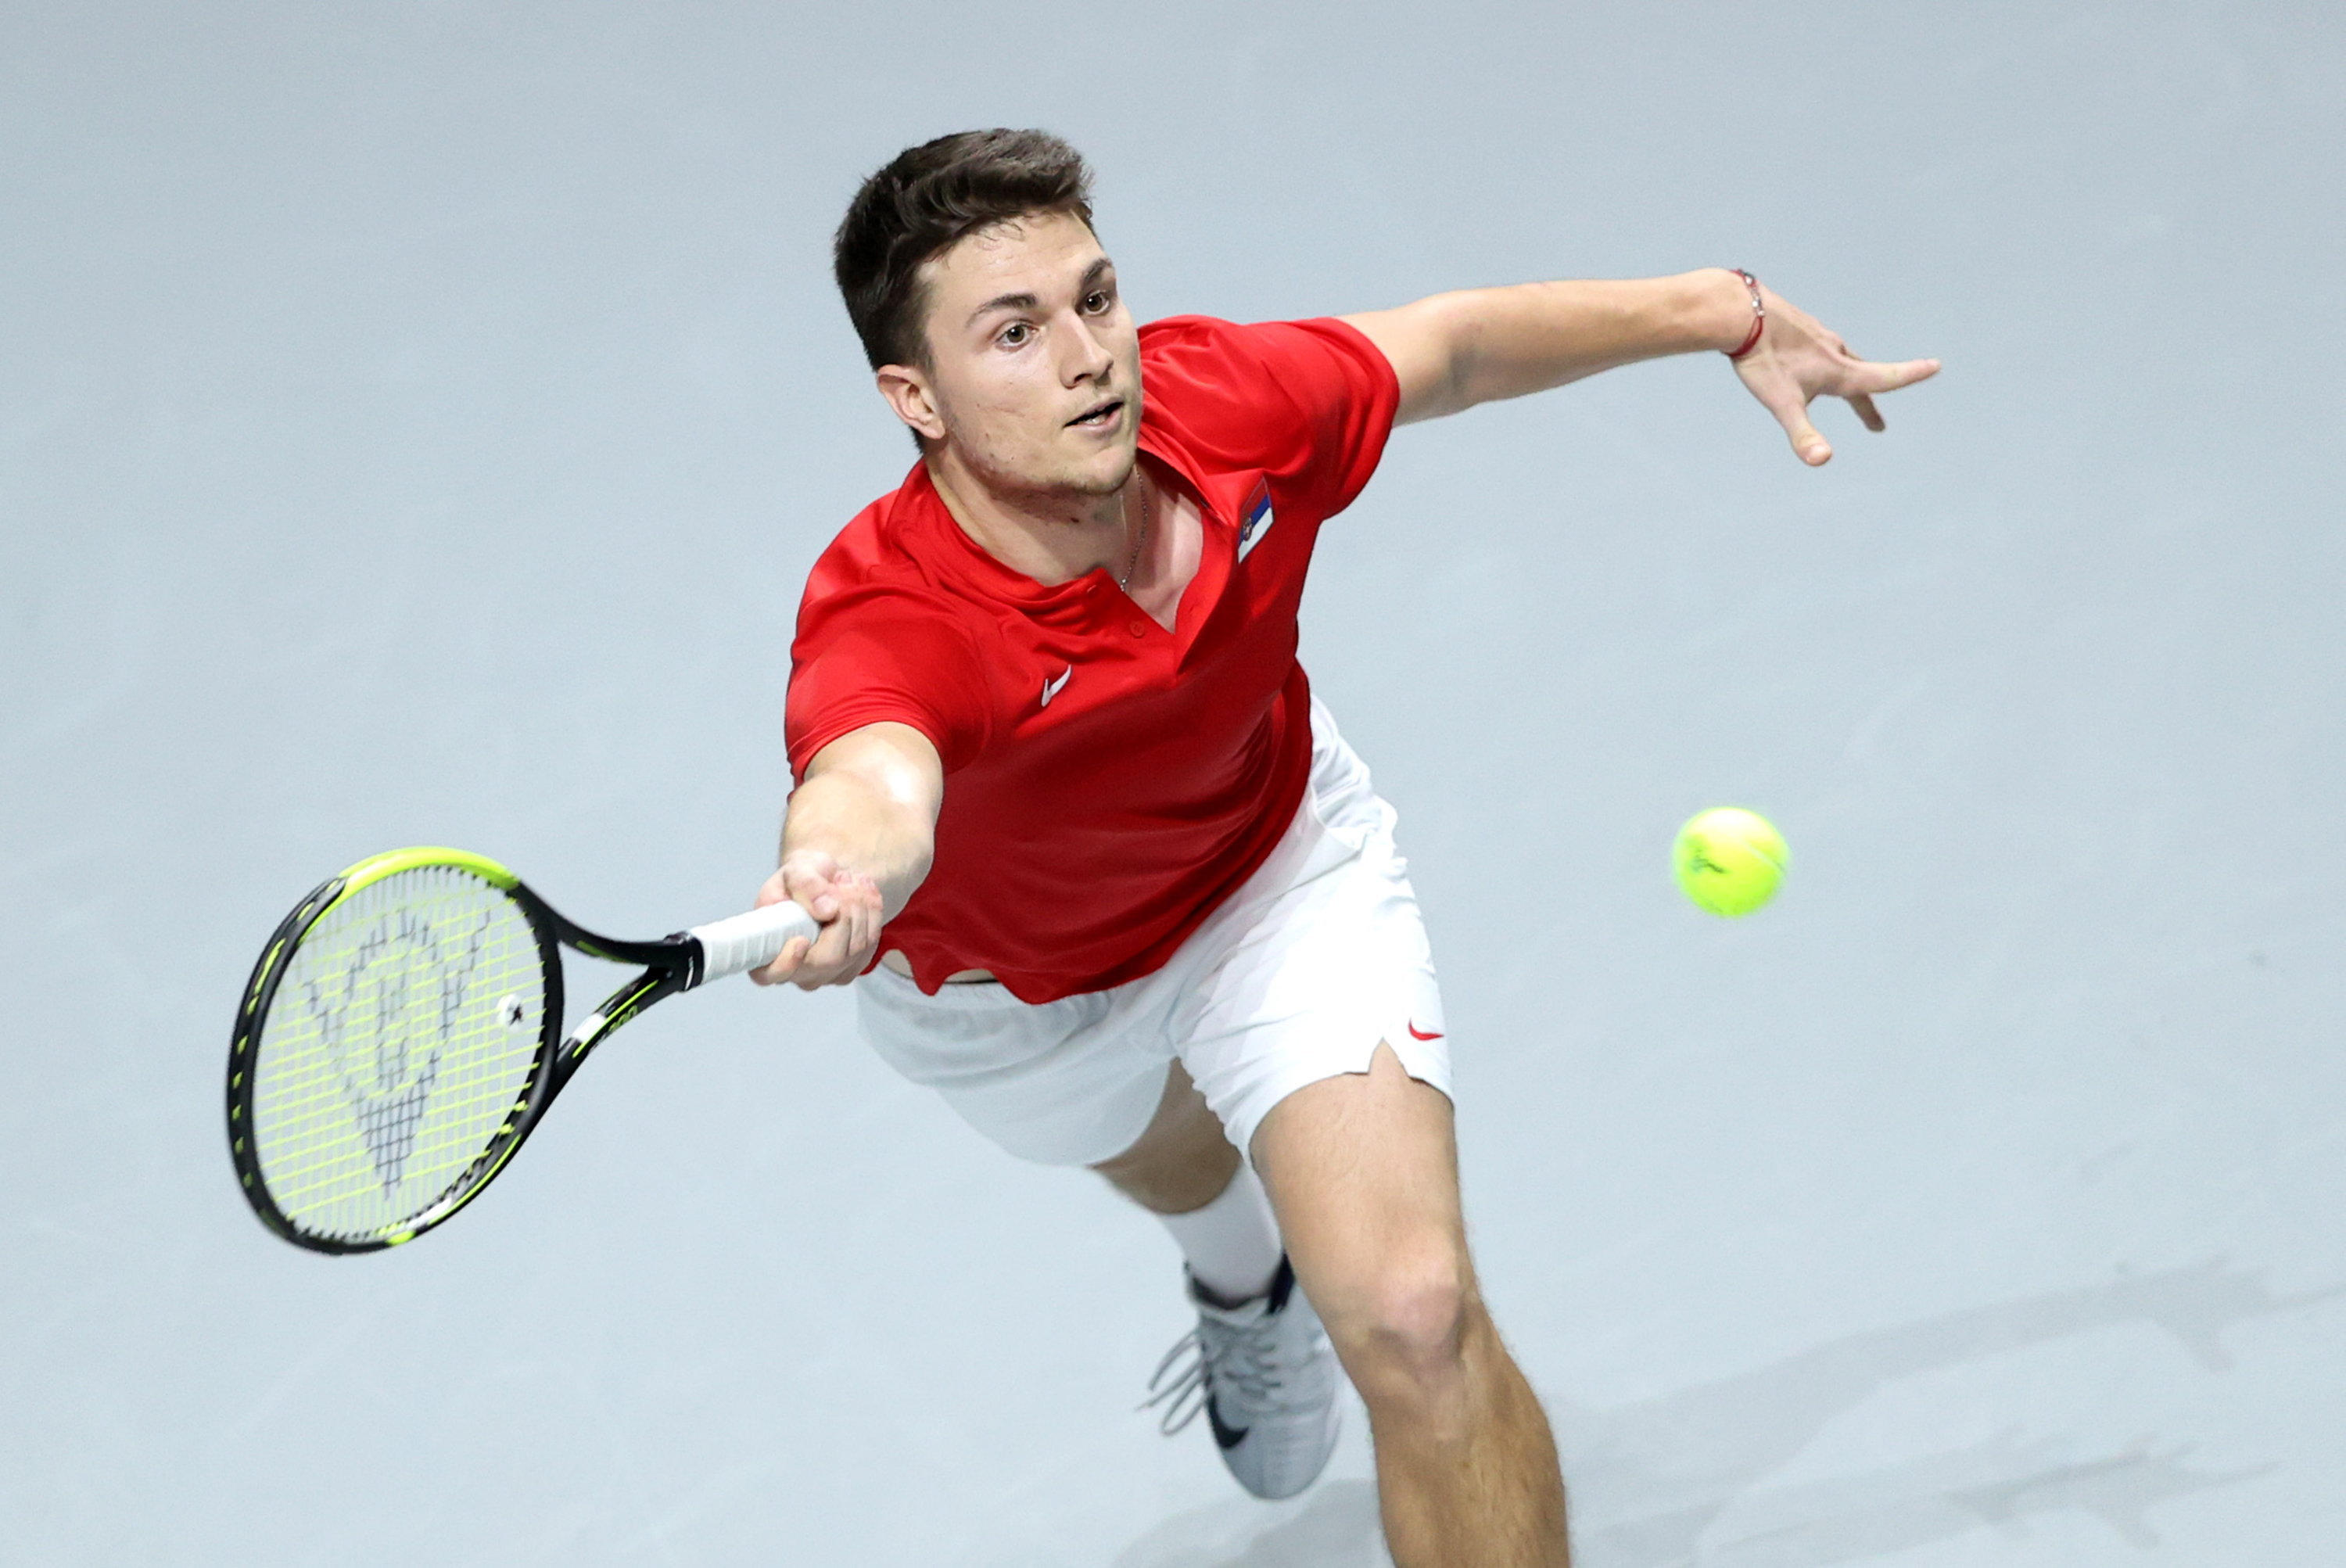 Serb tennis player Miomir Kecmanovic will face Novak Djokovic in the first round.